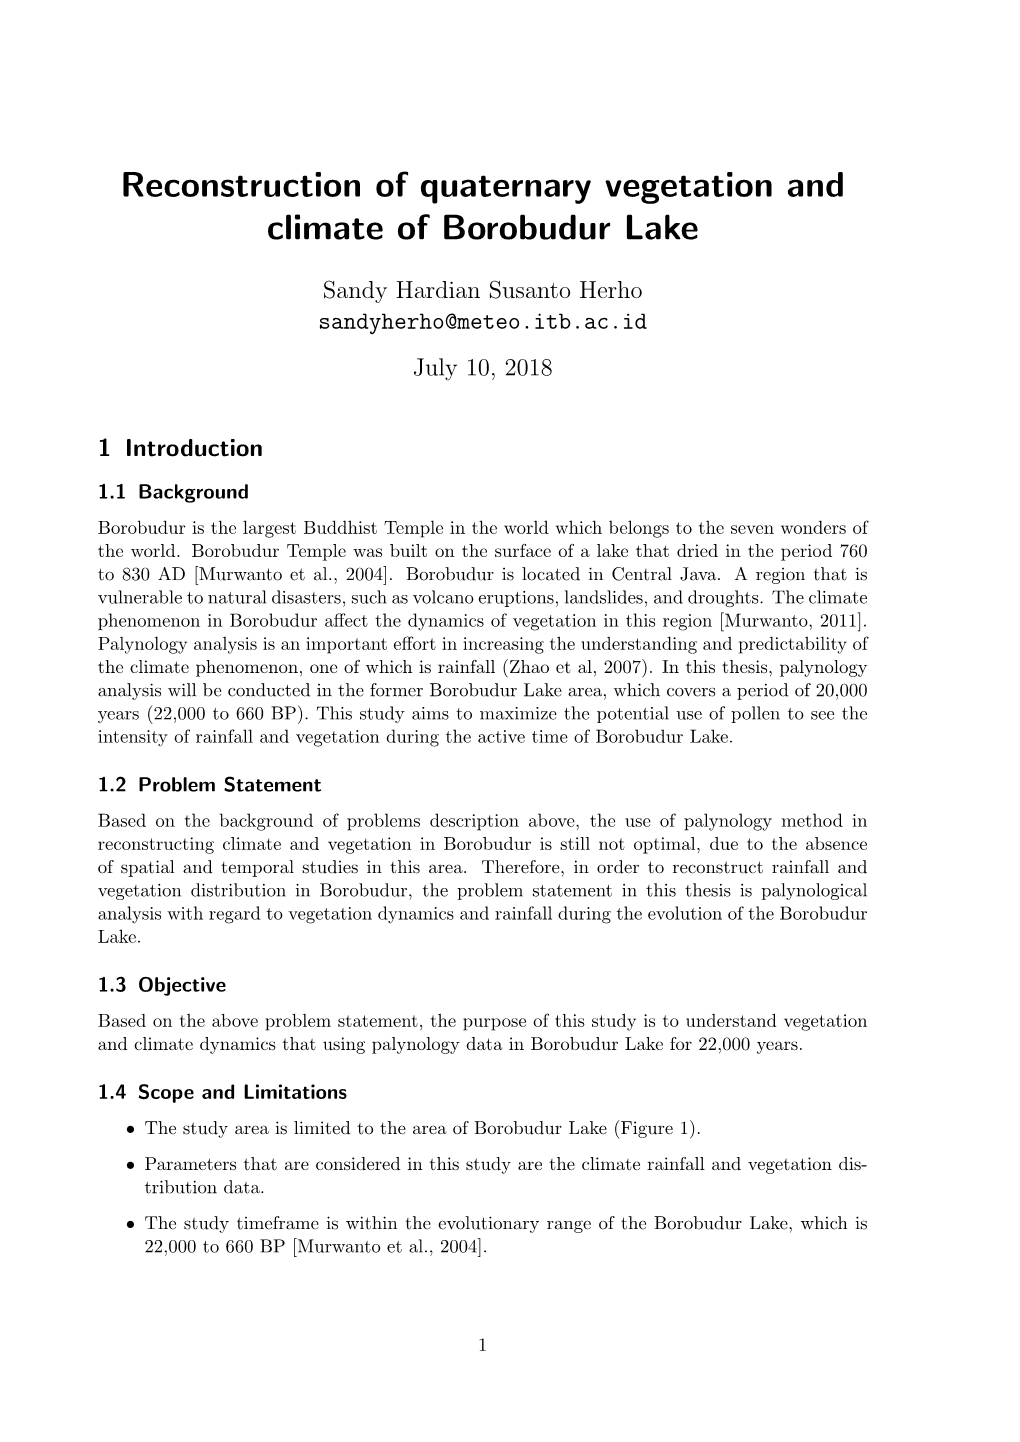 Reconstruction of Quaternary Vegetation and Climate of Borobudur Lake